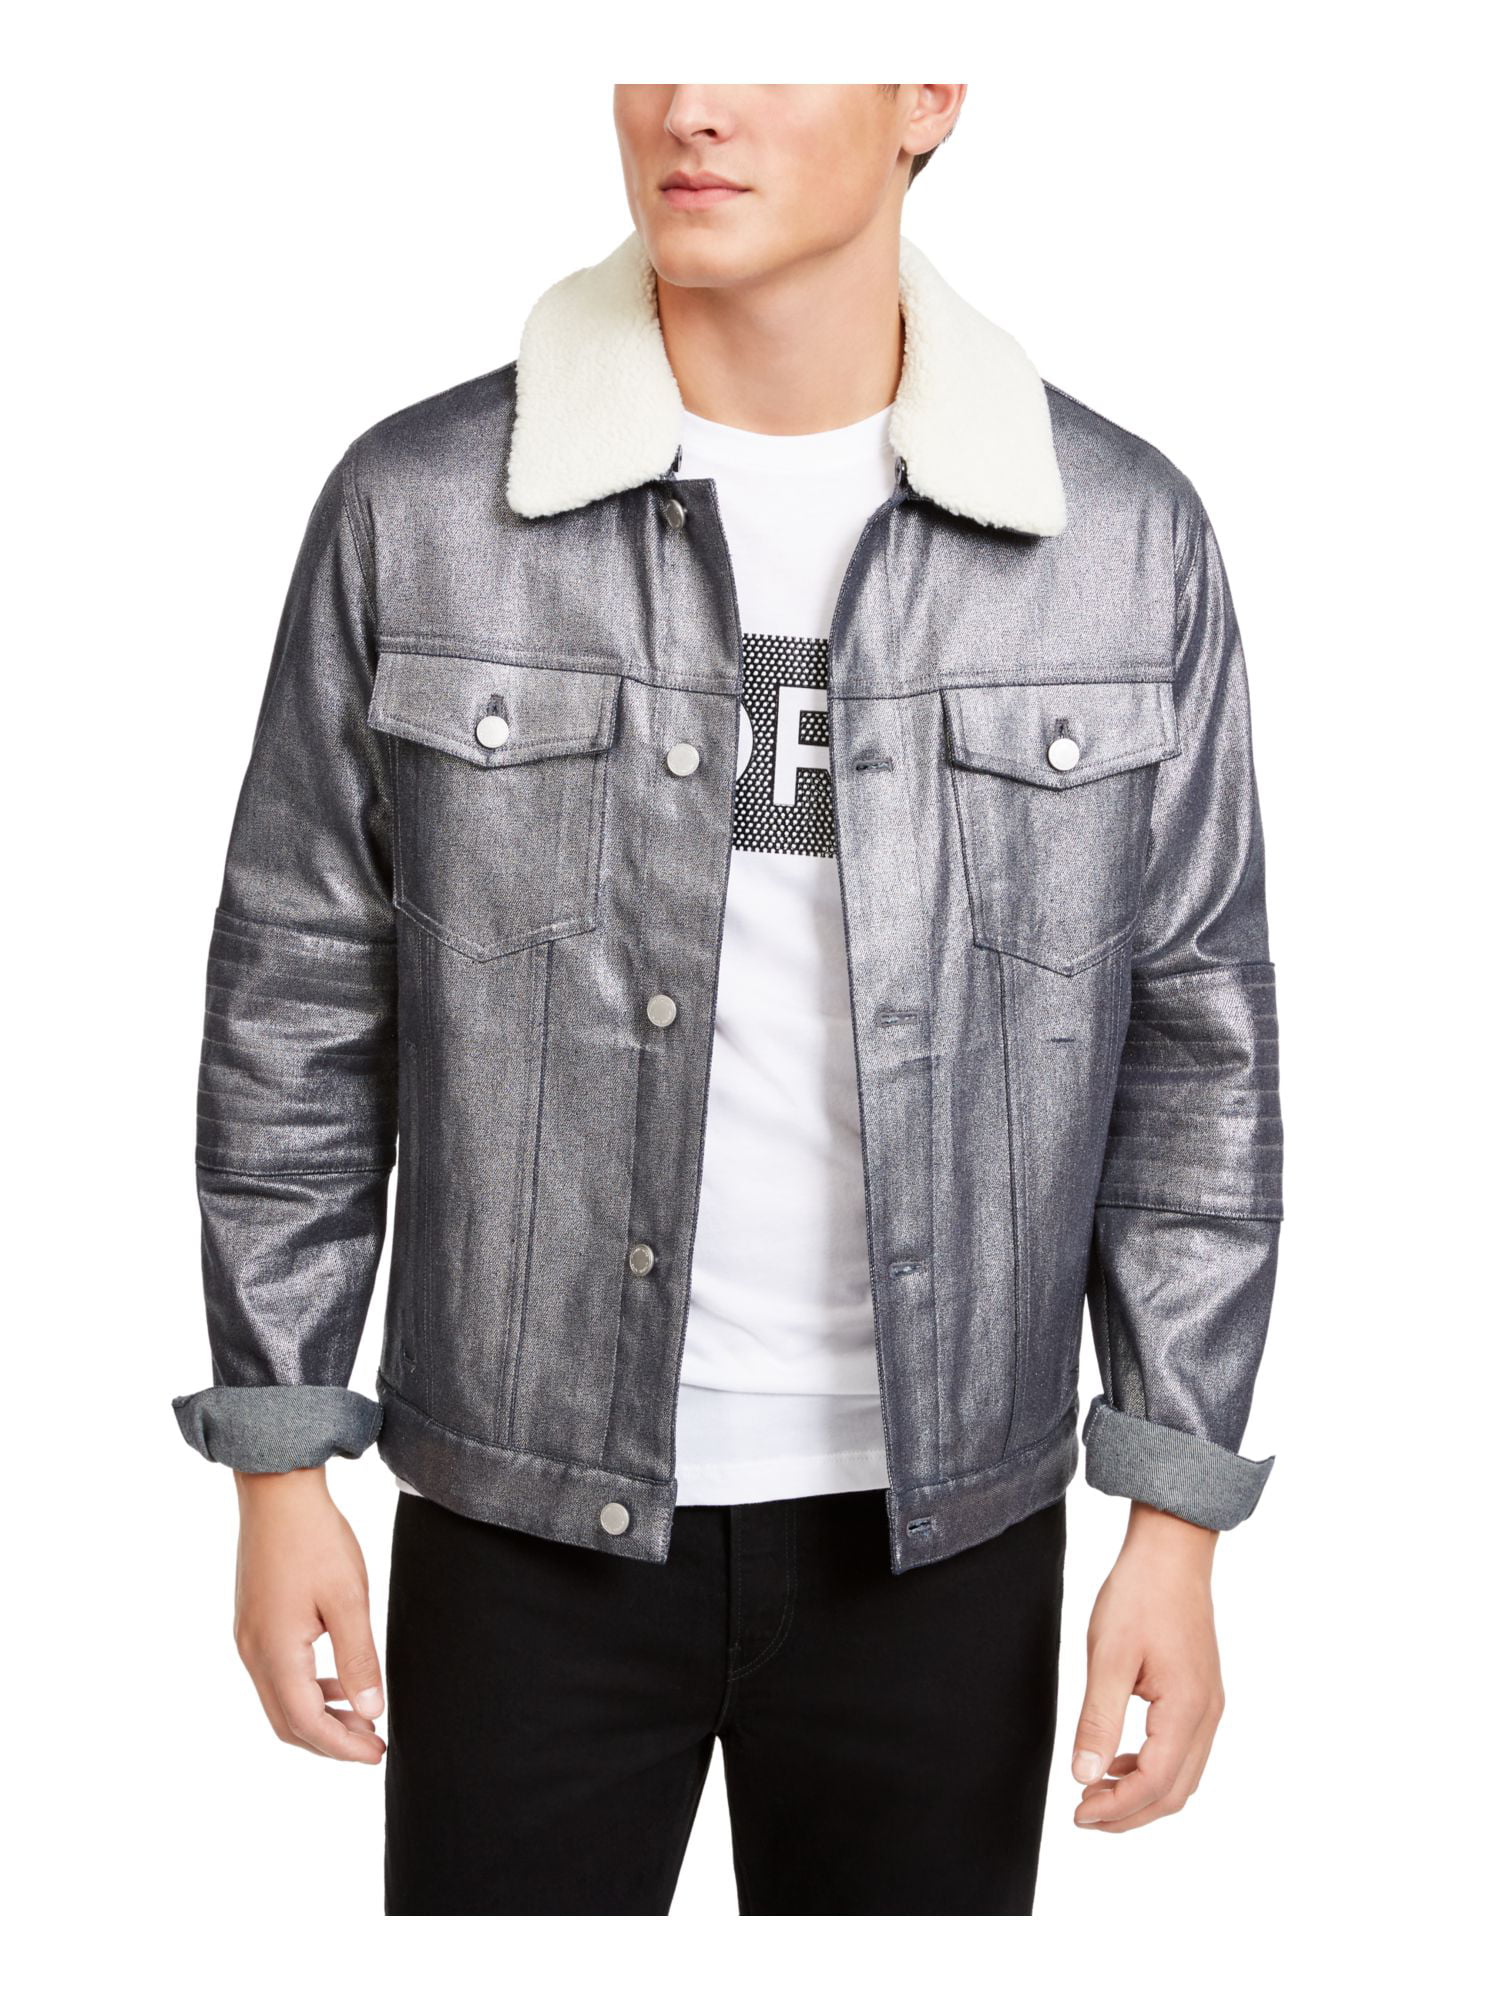 Ennovative Selection Western Style Suede Leather Jacket Men 